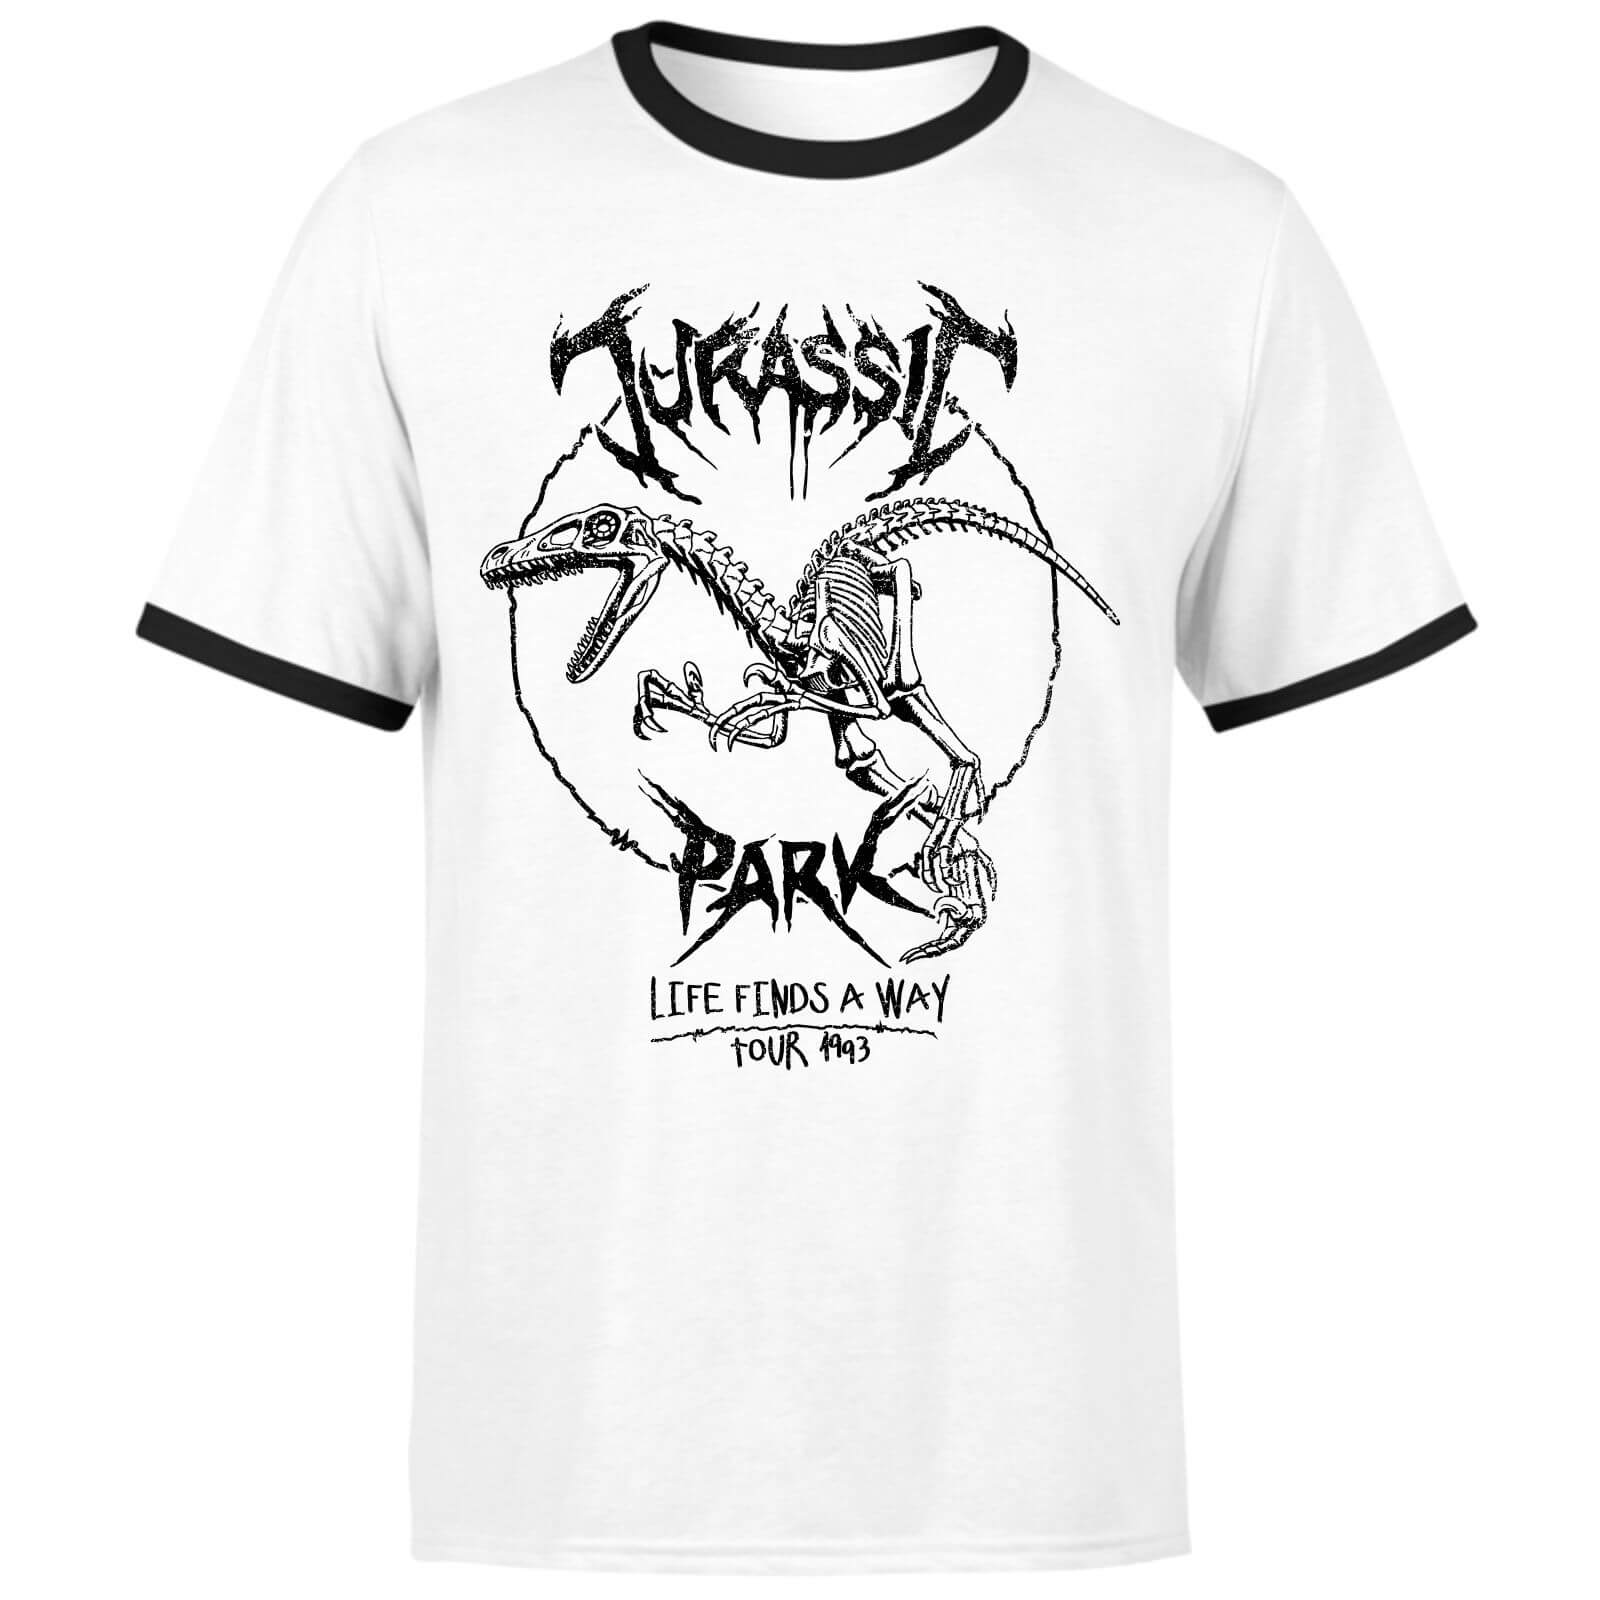 View the best prices for: jurassic park raptor drawn unisex ringer t-shirt